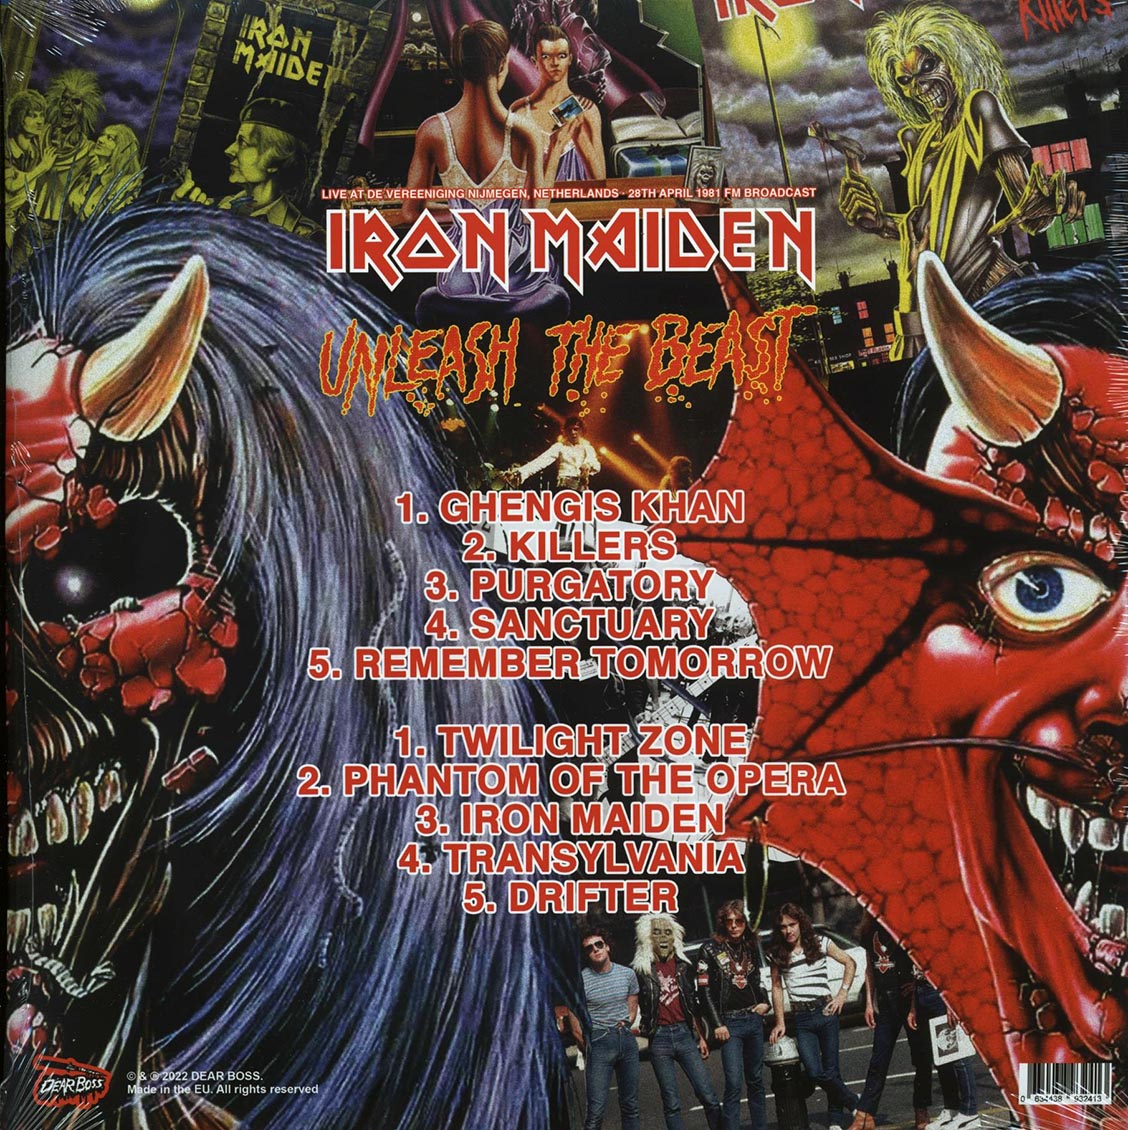 Iron Maiden - Unleash The Beast: Live At De Vereeniging Nijmegen, Netherlands 28th April 1981 FM Broadcast (ltd. 500 copies made) (pink vinyl) - Vinyl LP, LP